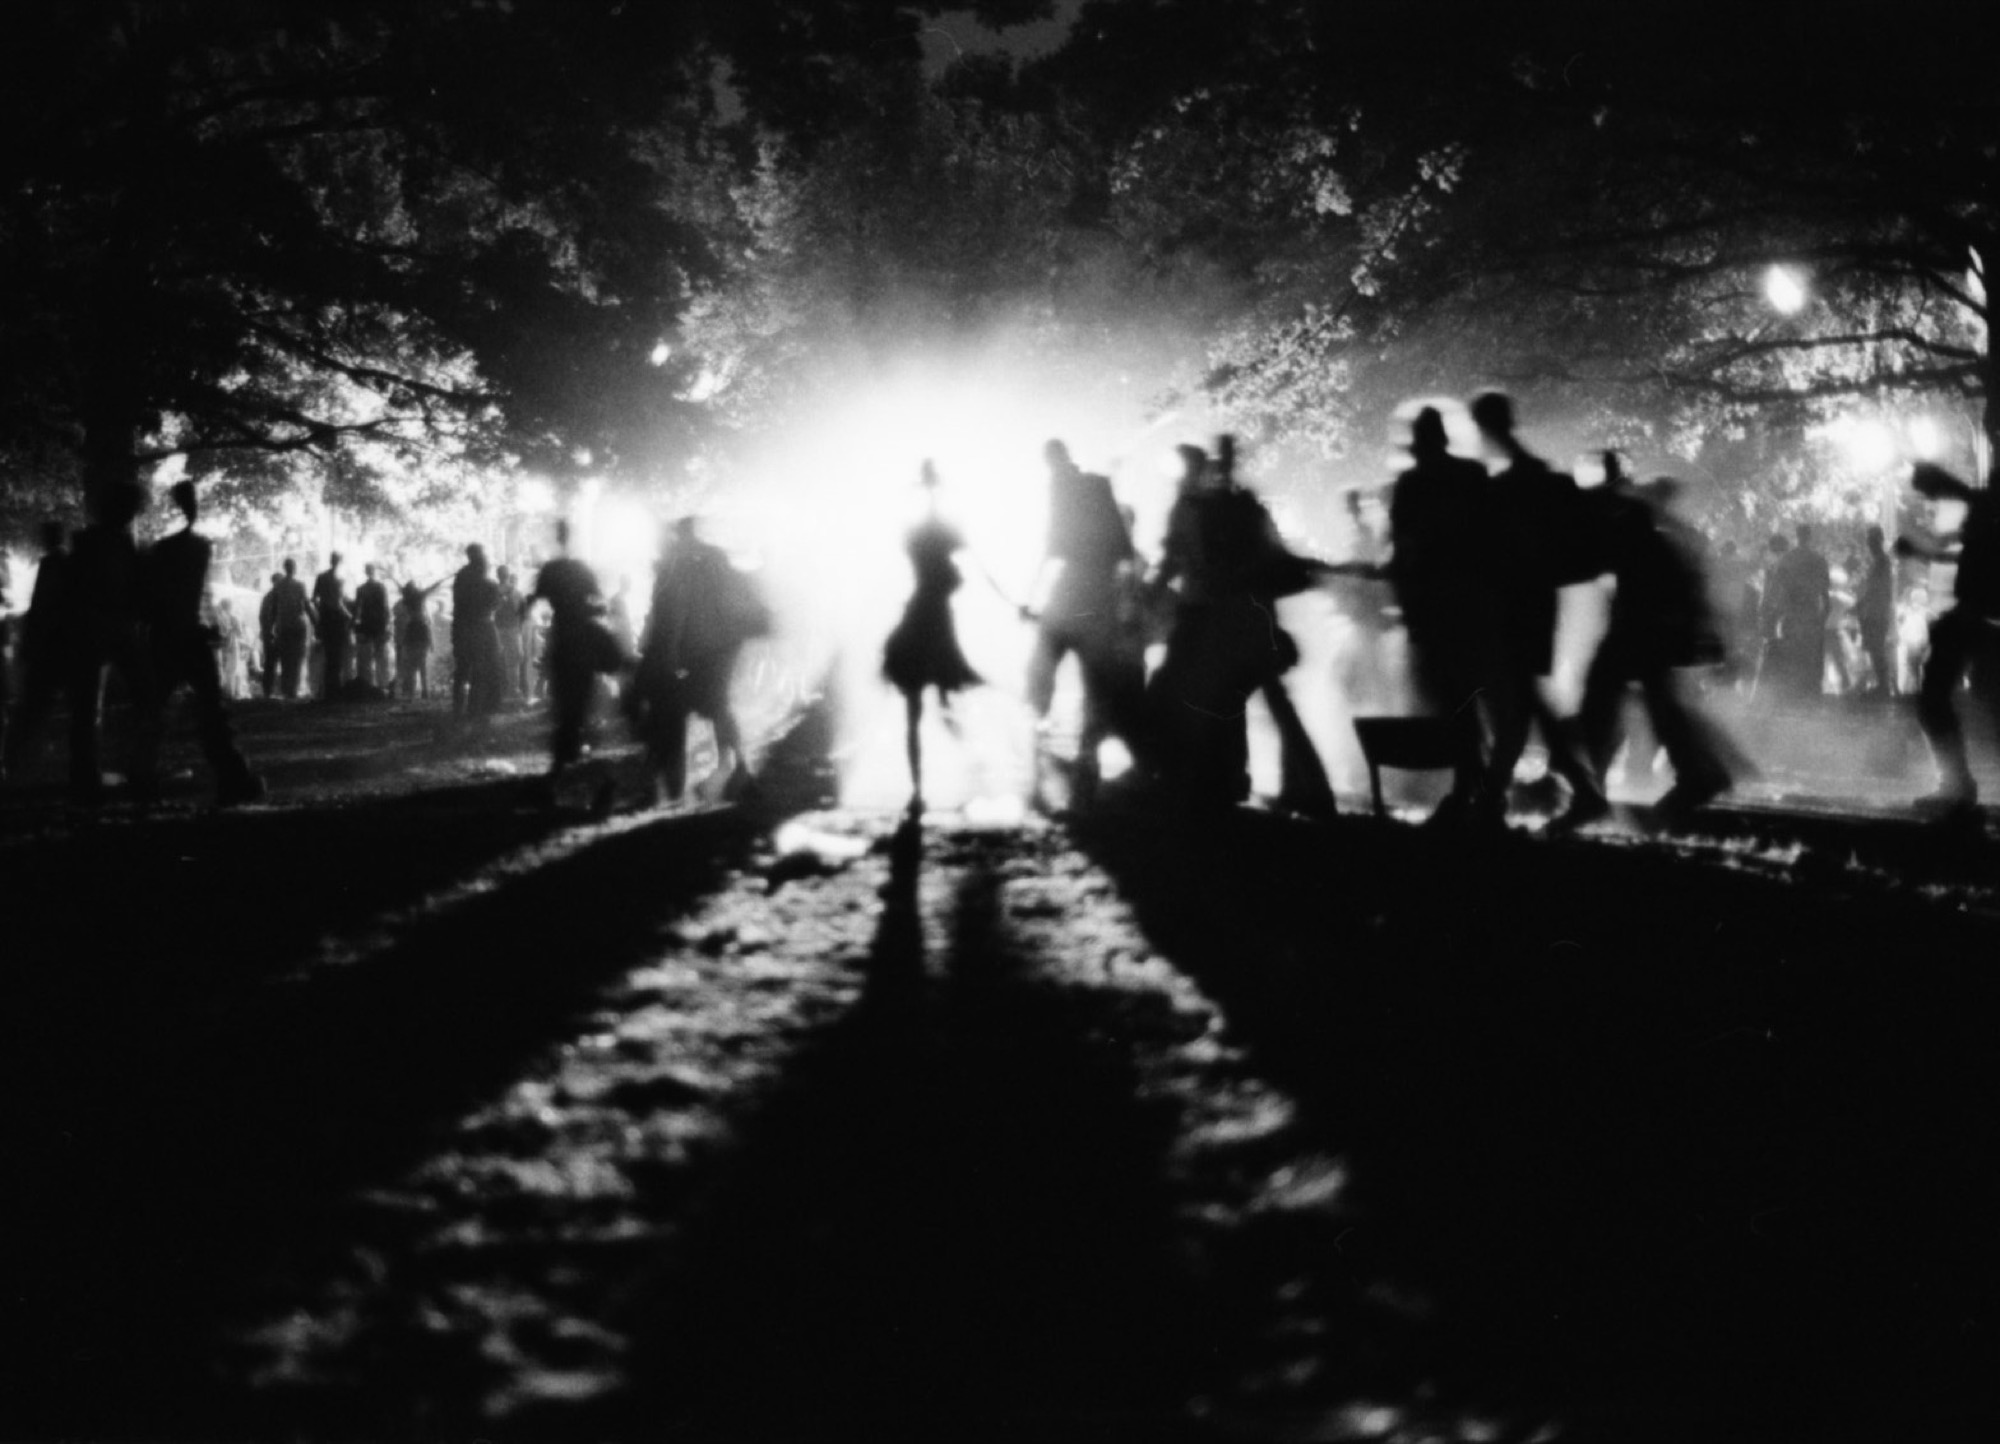  love-parade-berlin-black-and-white-photography-35mm-matthias-grunsky 